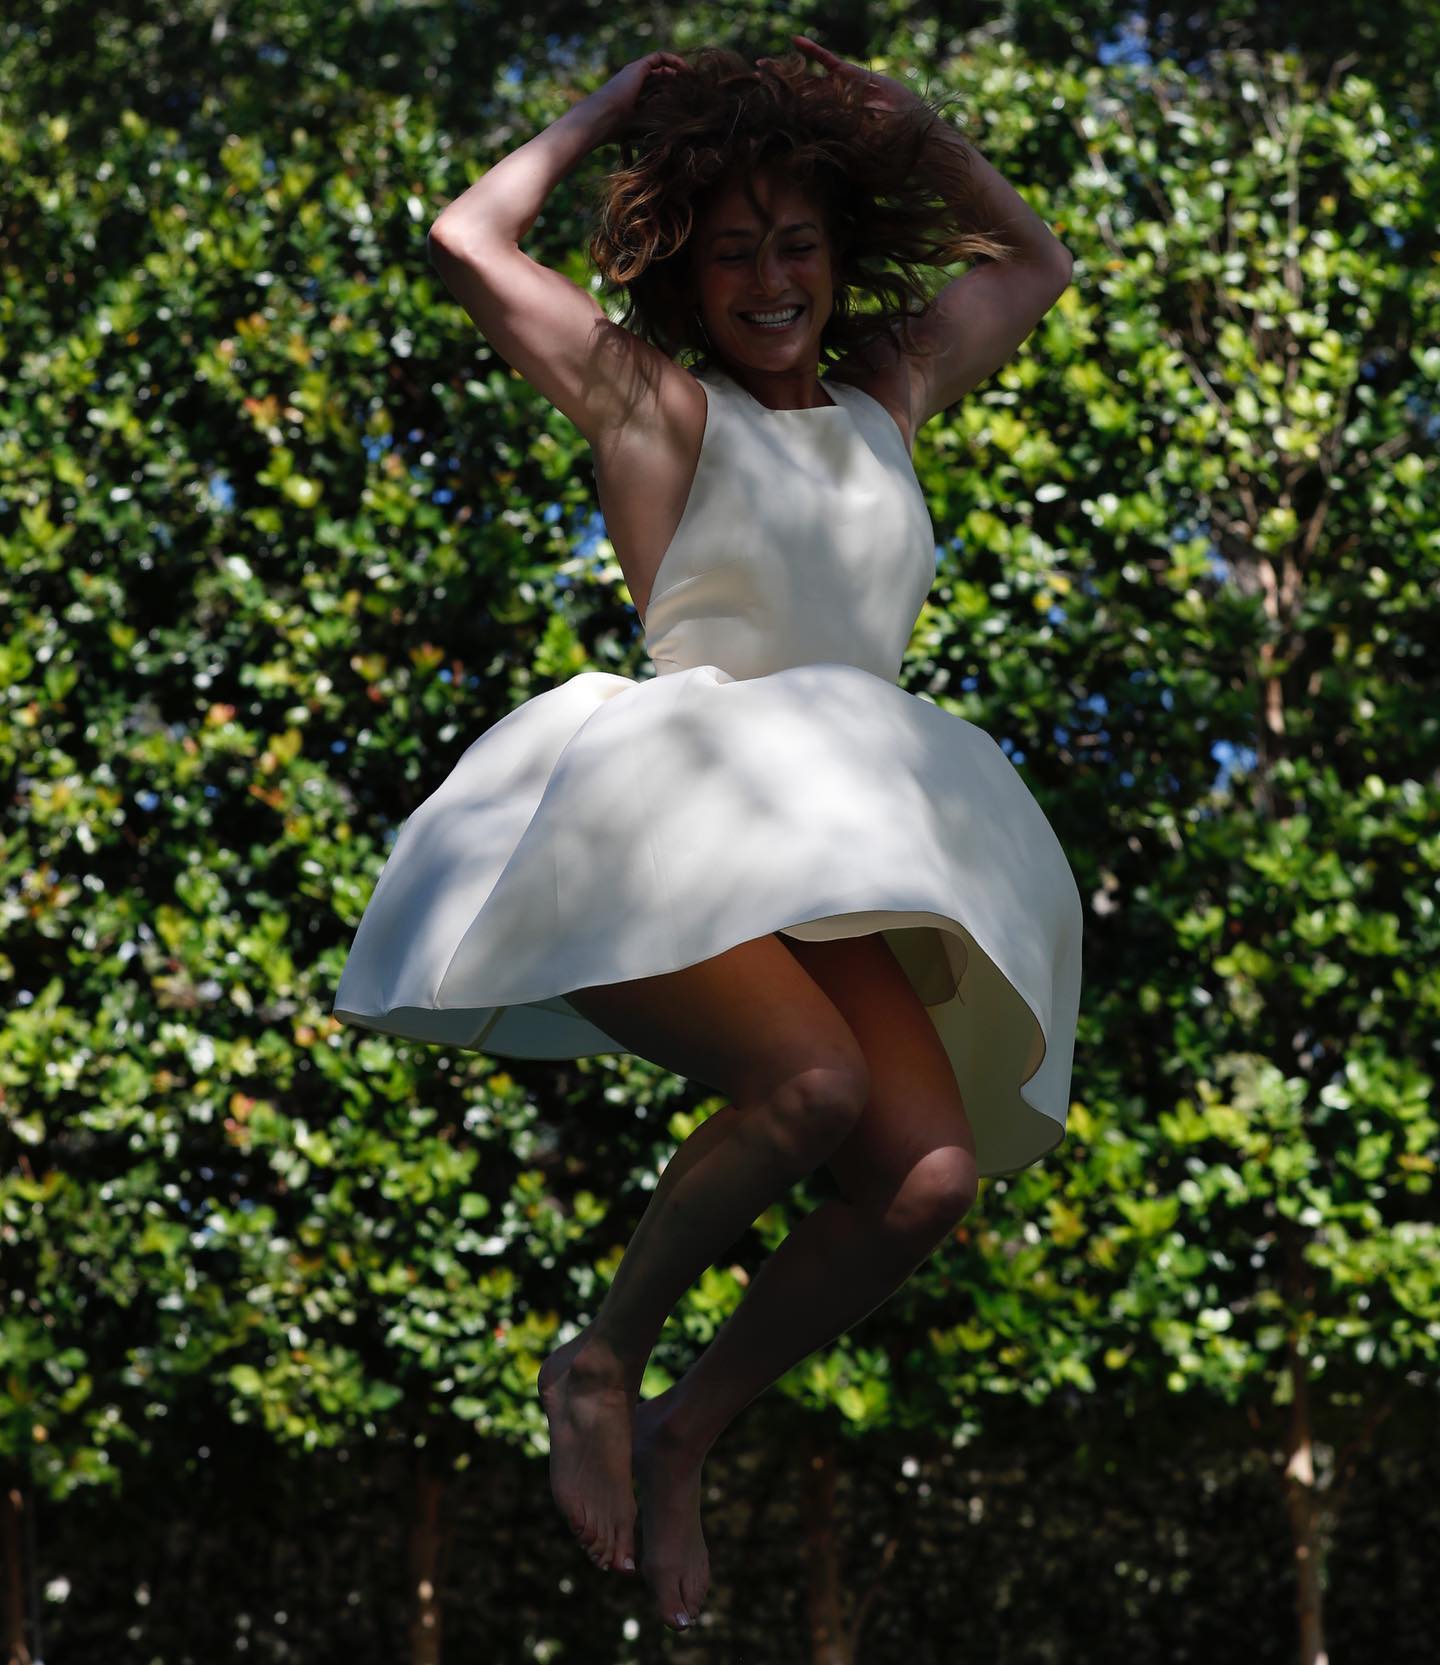 Fotos n°2 : Jennifer Lopez est saltando por la alegra!